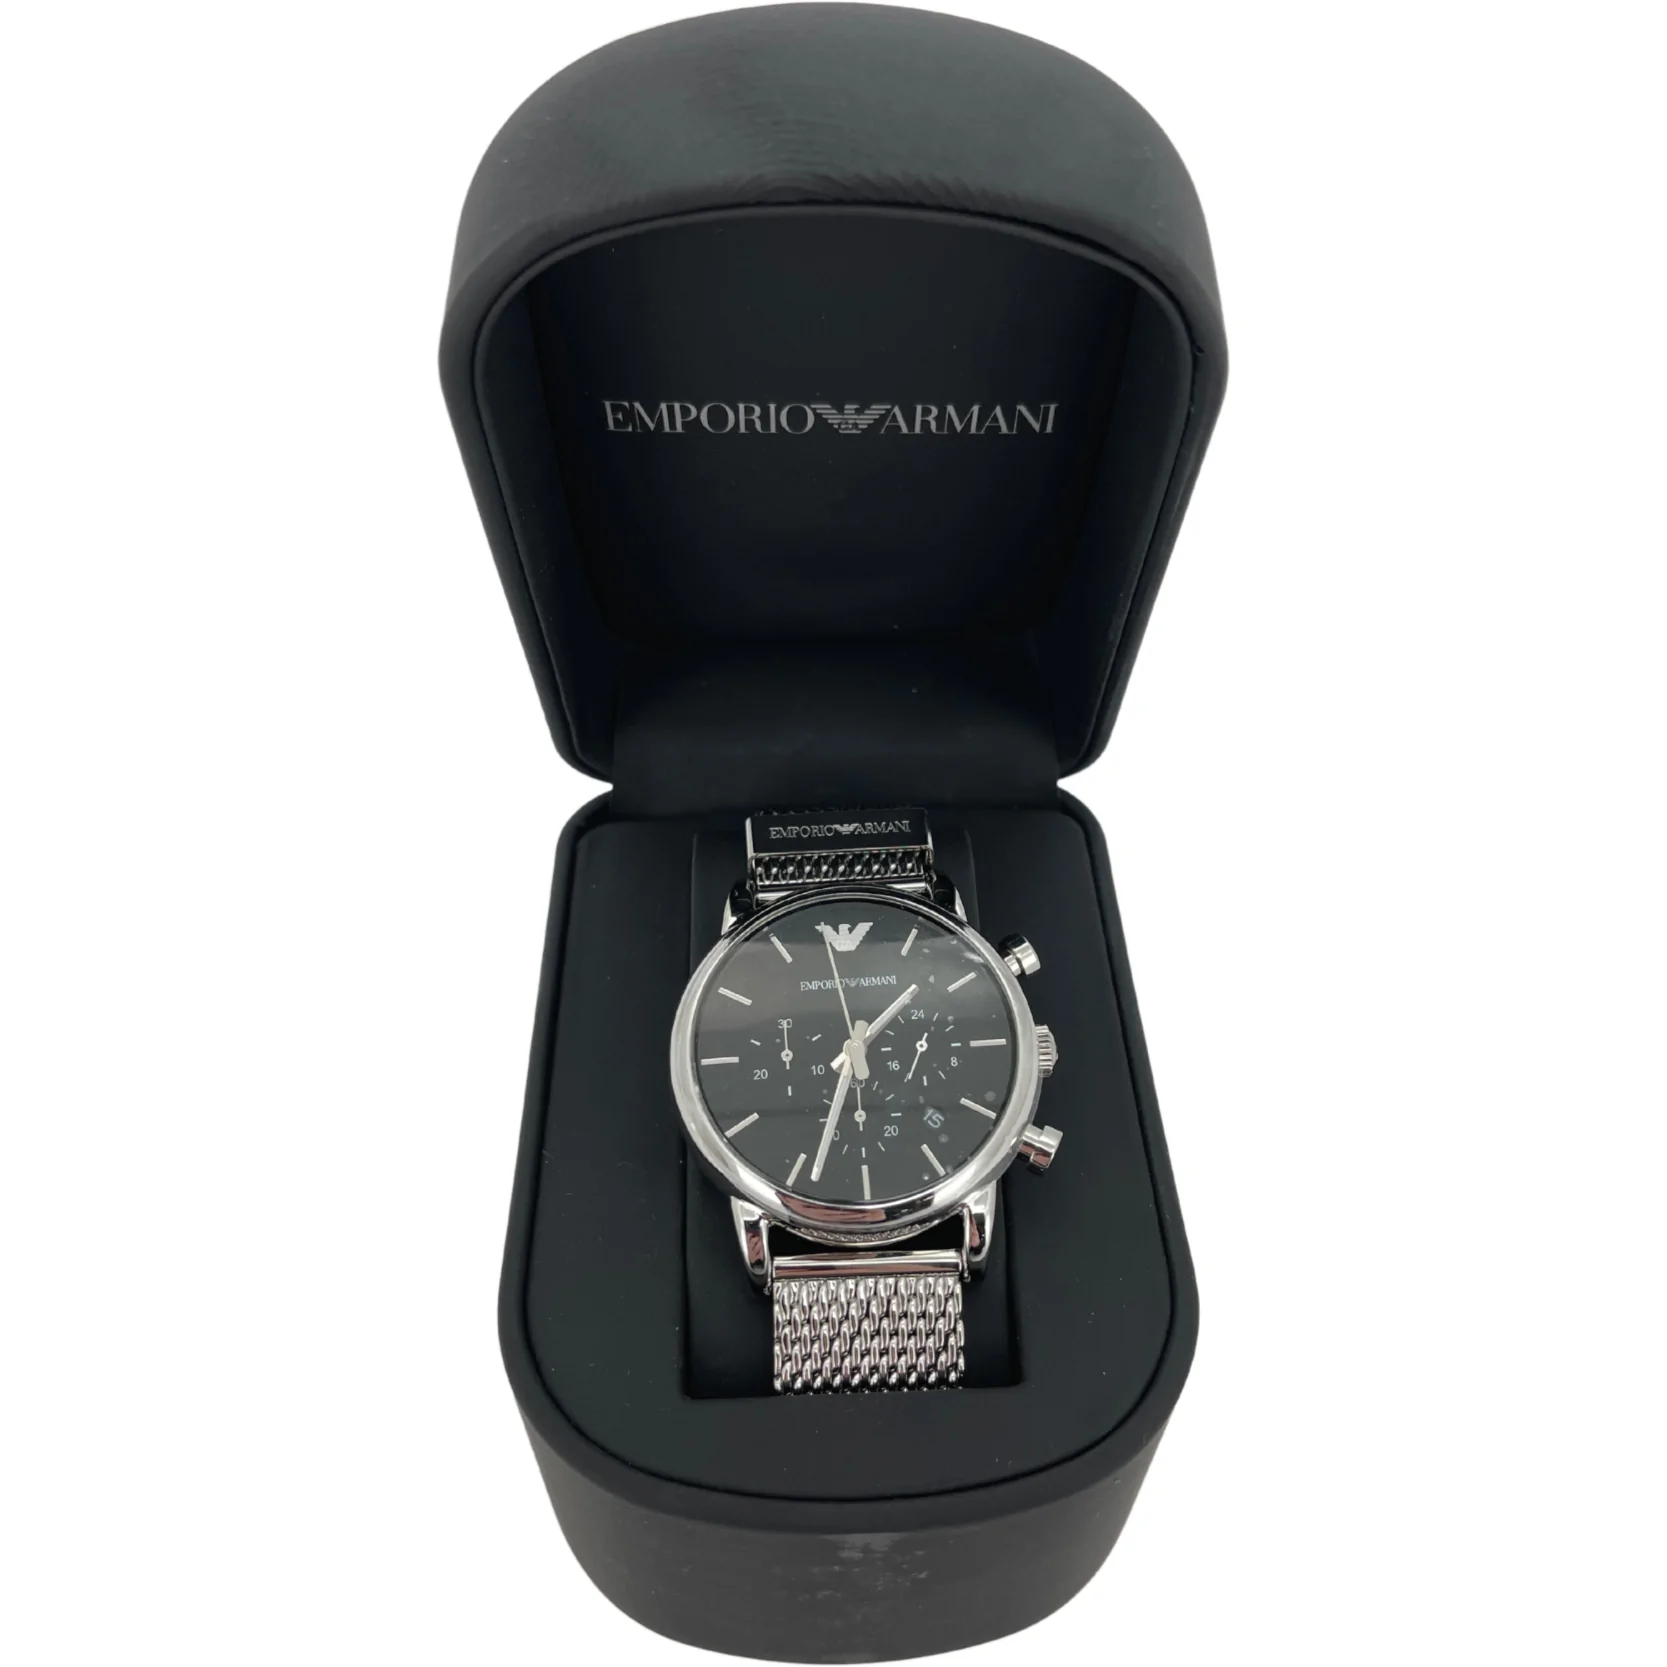 Display Chronograph / / Liquidations / Armani – Wrist CanadaWide Watch Emporio AR1811 Silver / Men\'s Watch Analog